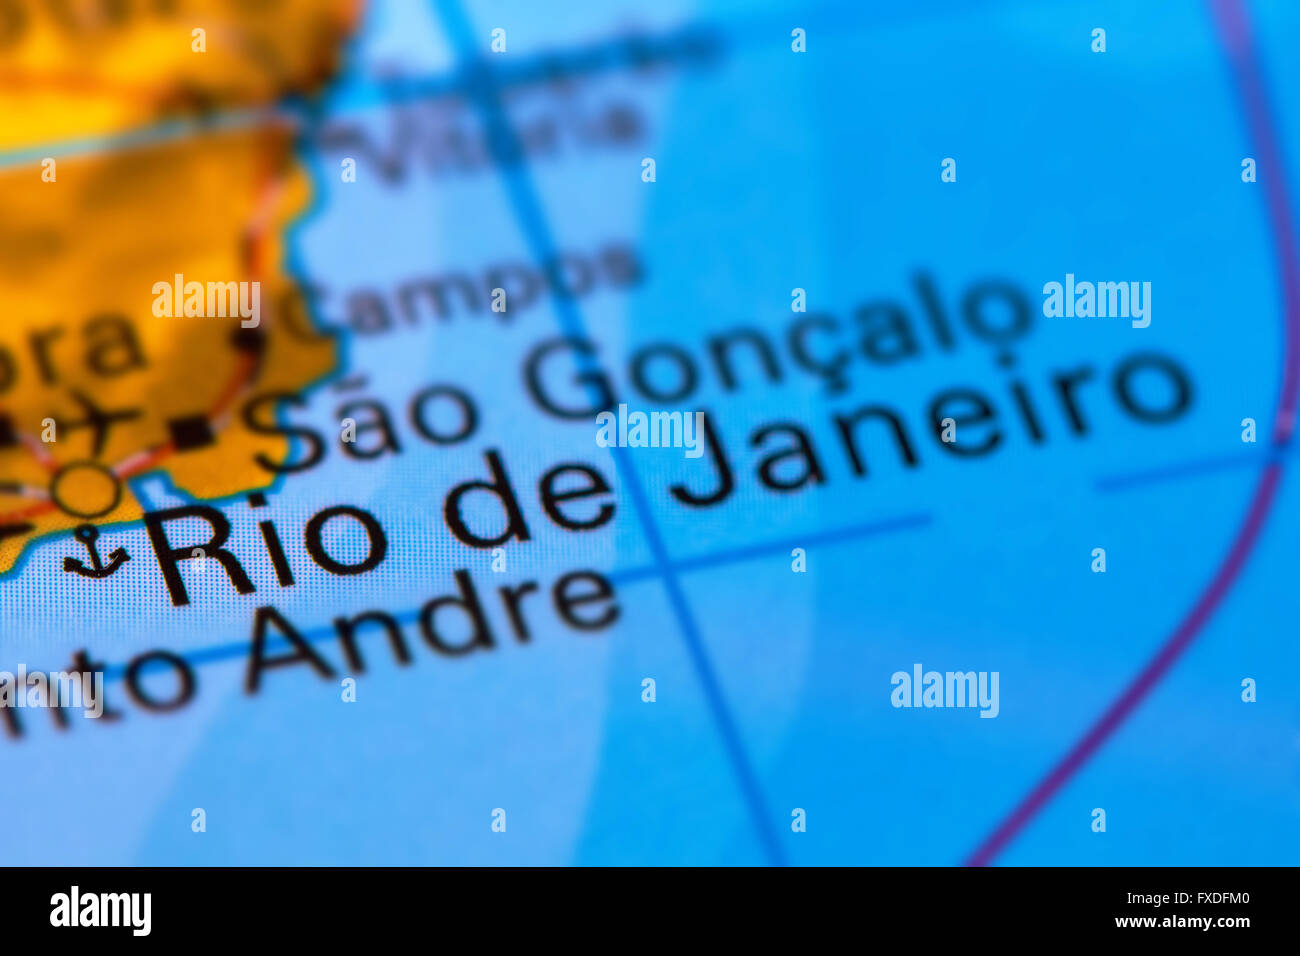 Rio De Janeiro City In Brazil On The World Map Stock Photo Alamy